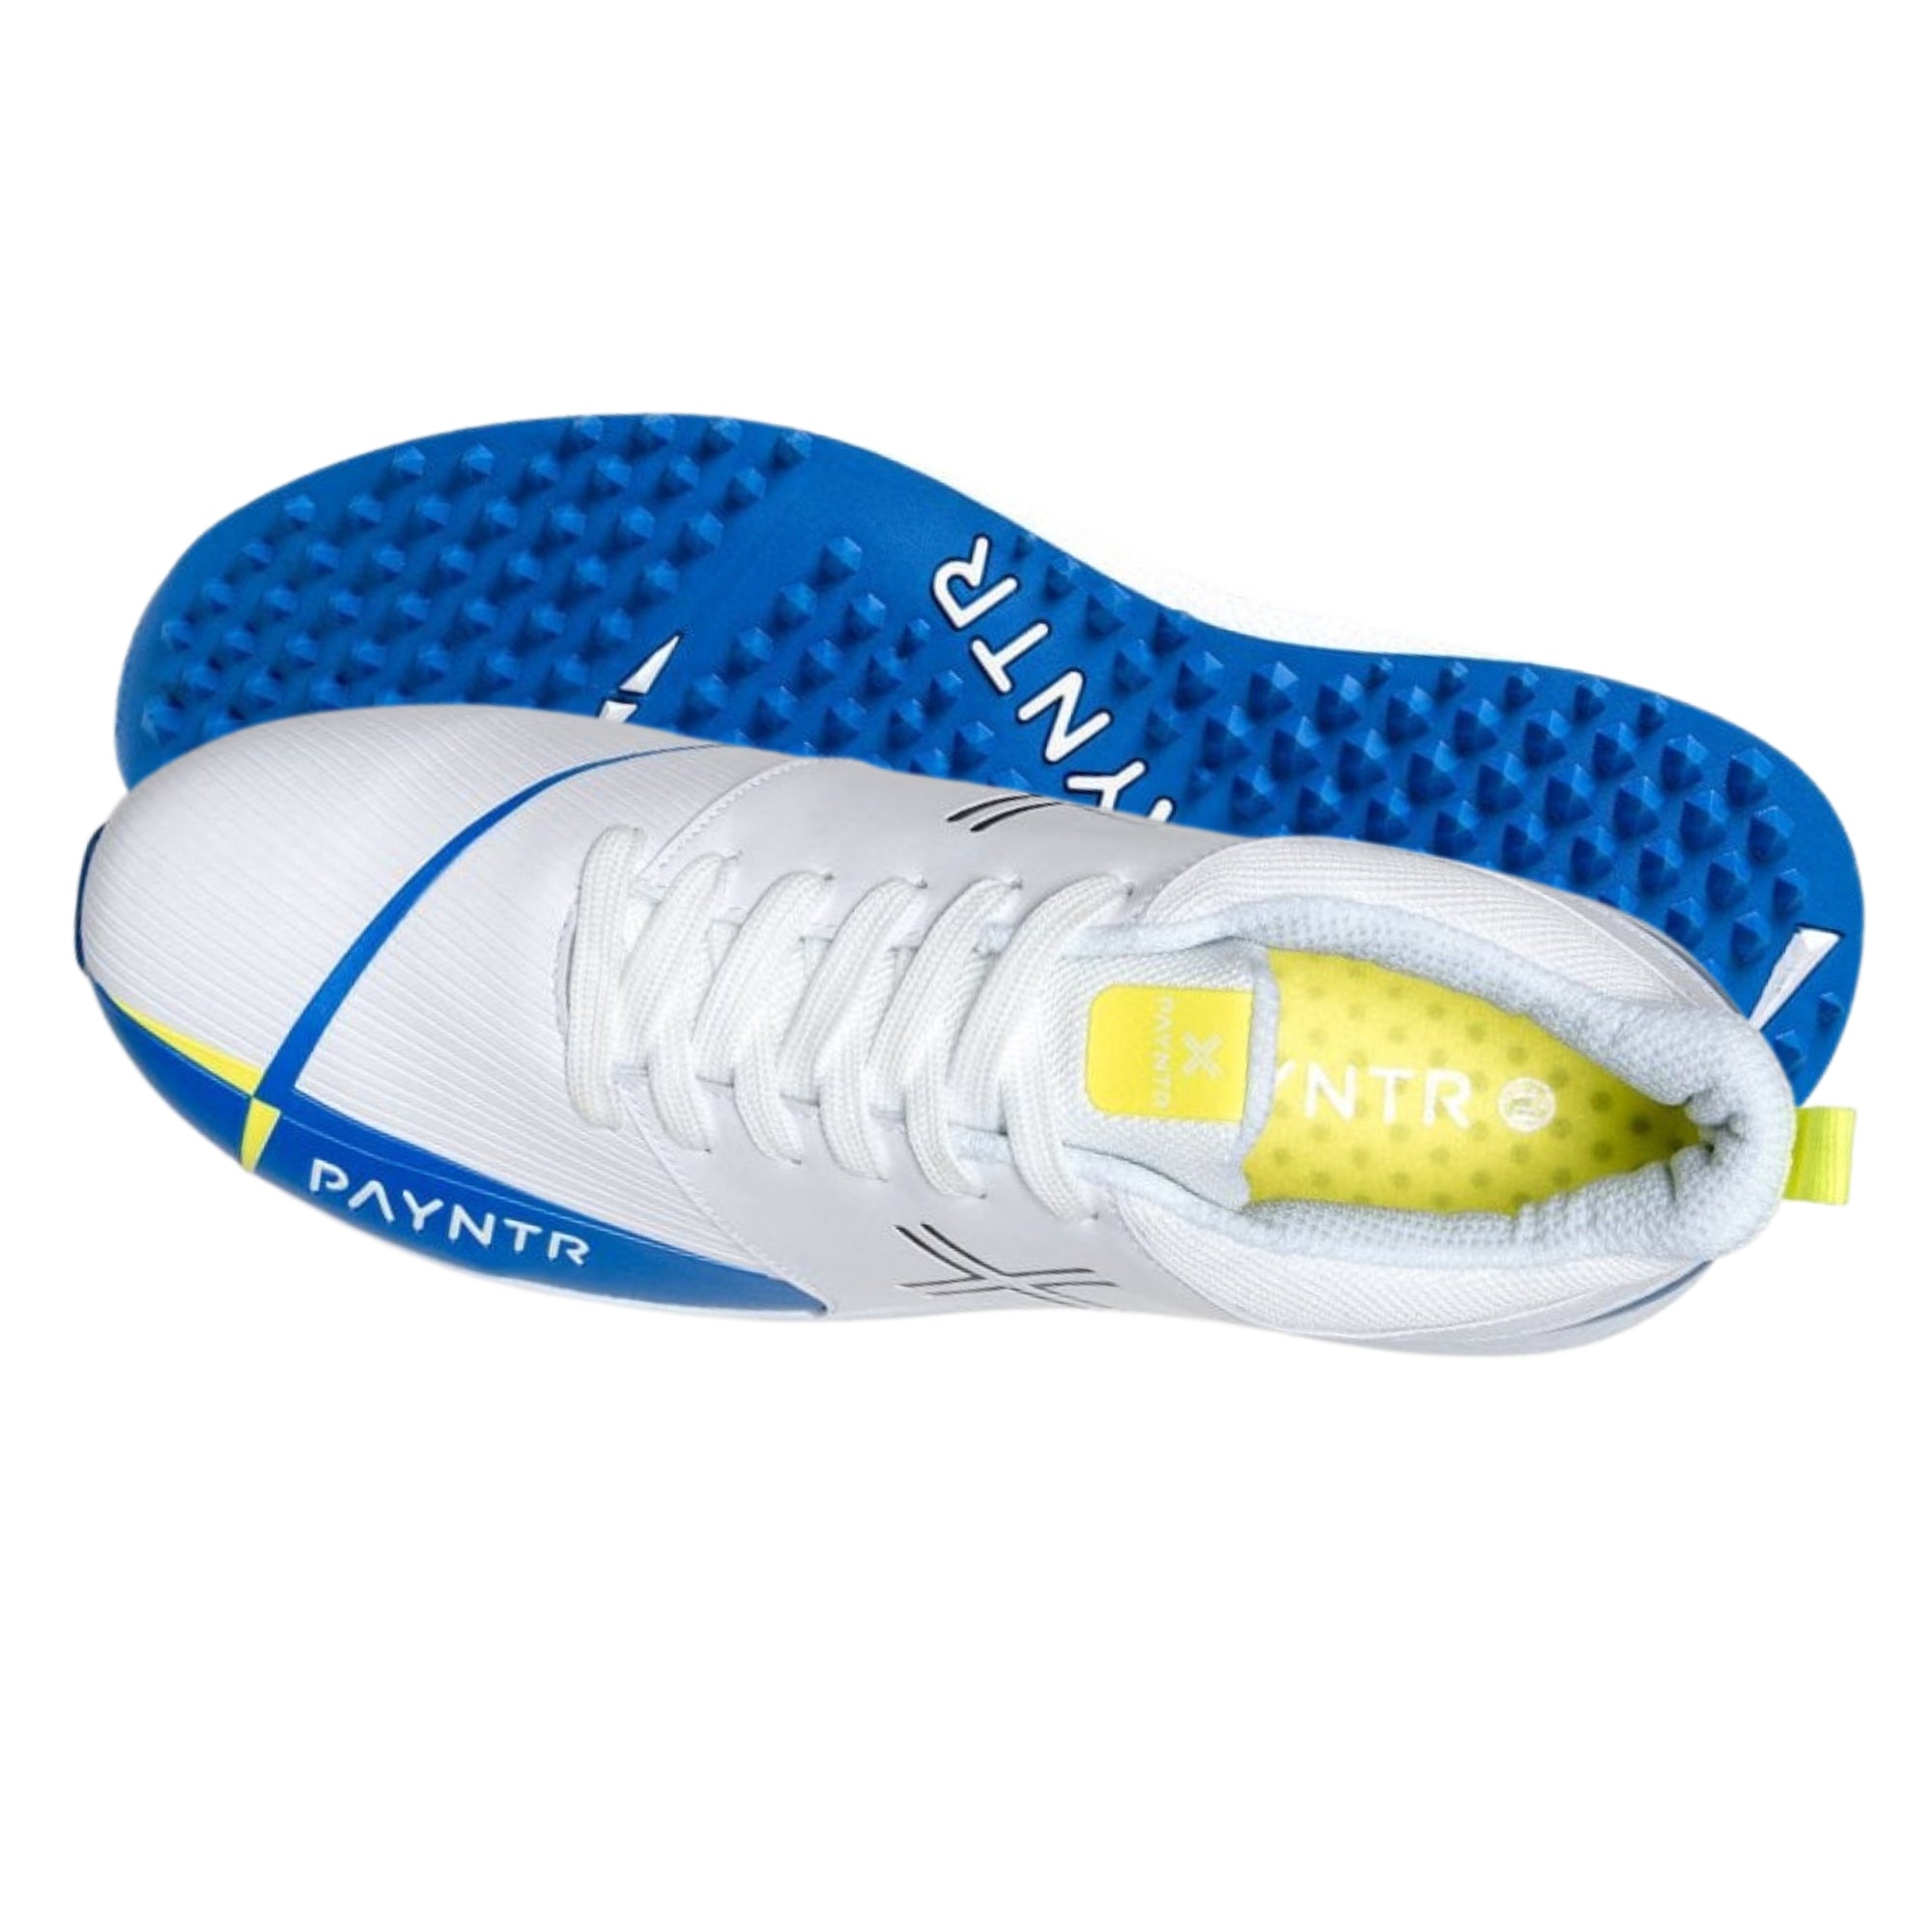 Payntr Cricket Shoes, Model V Pimple - White/Blue